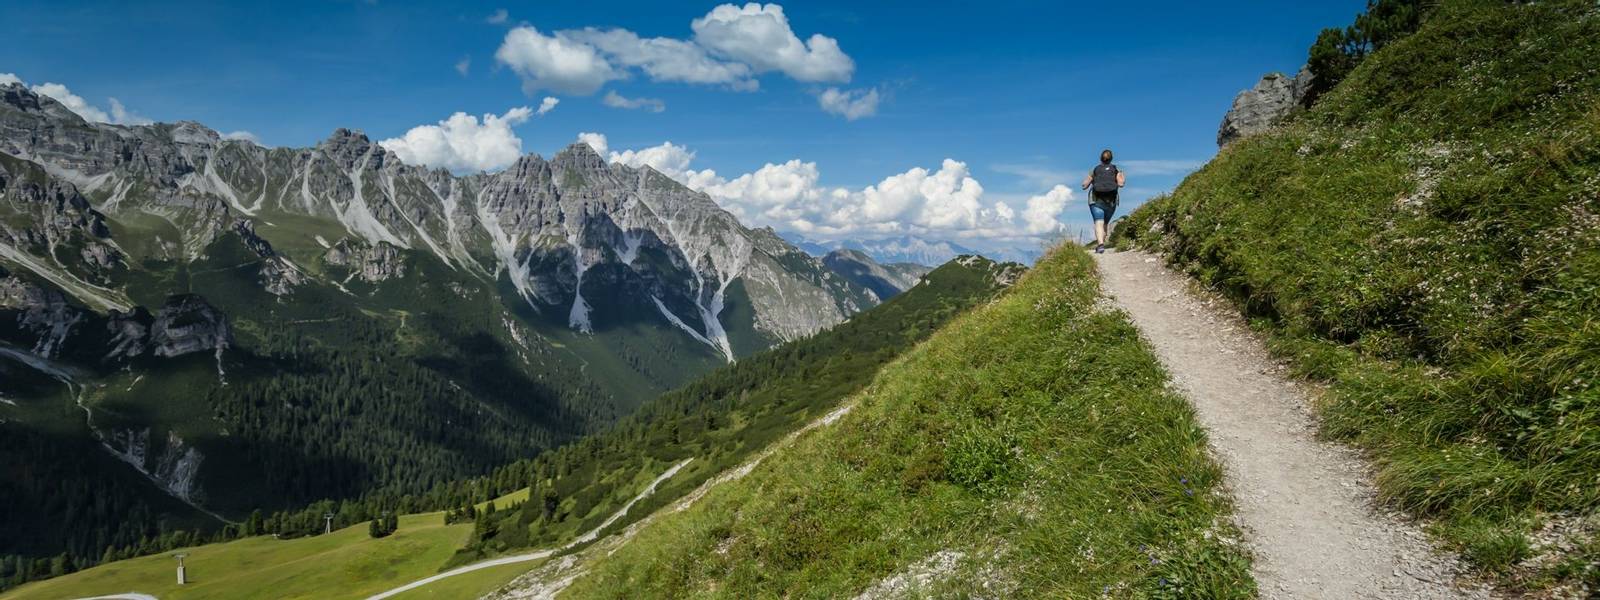 Austria - Neustift - Stubai Alps - AdobeStock_92315173.jpeg